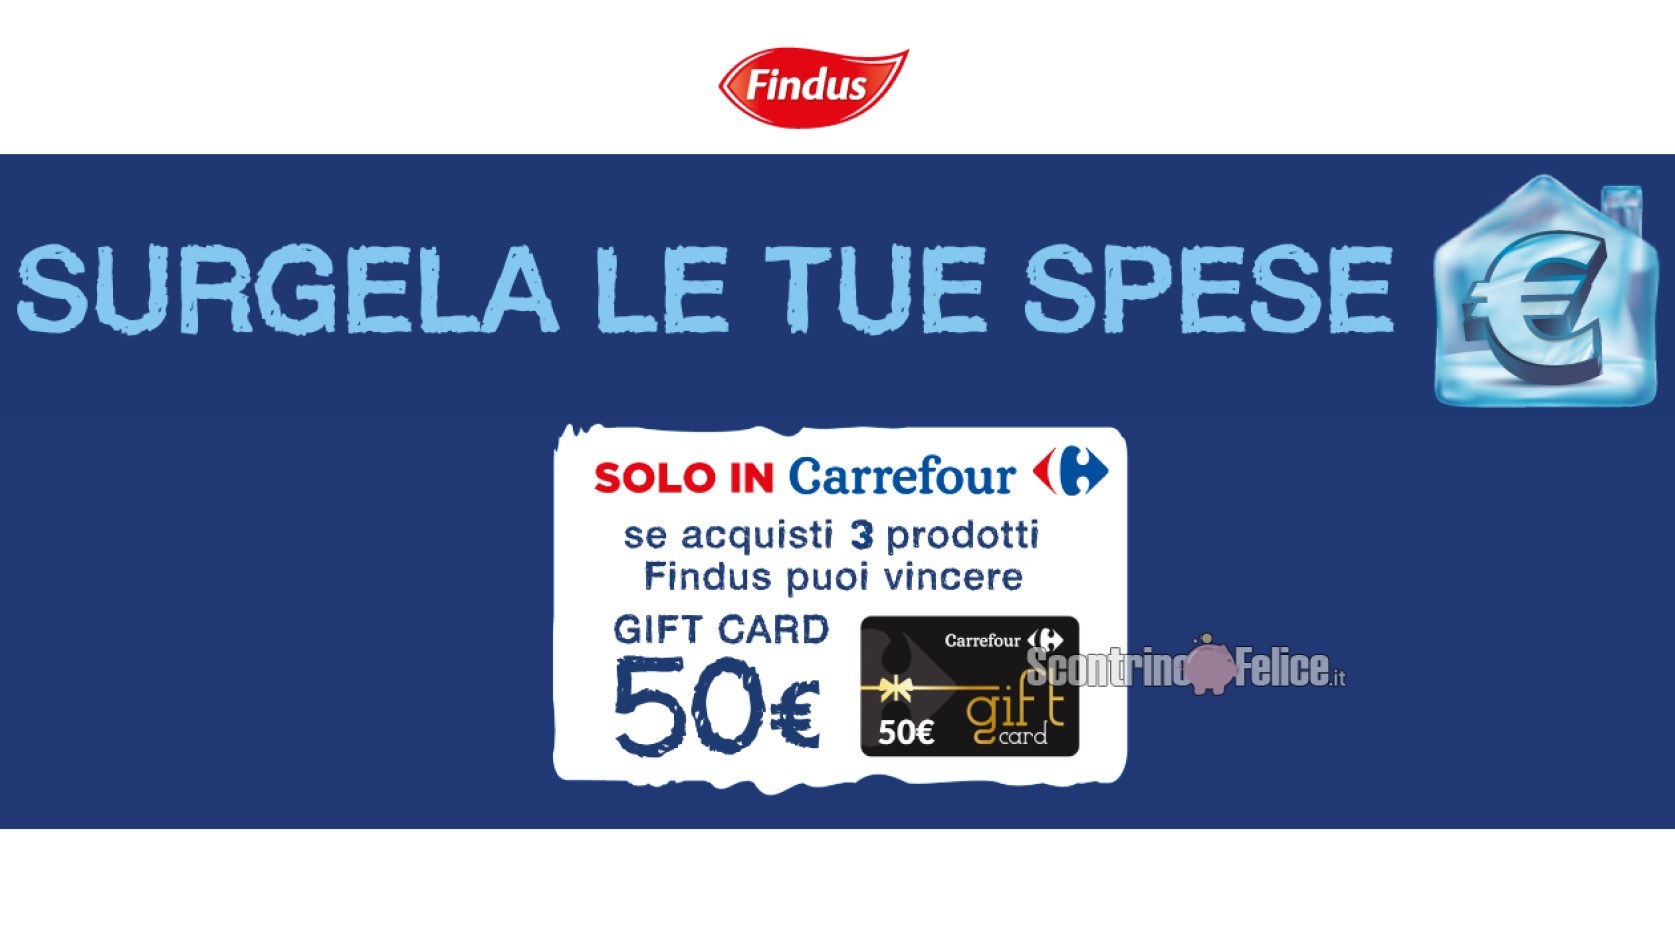 Concorso Findus da Carrefour Surgela le tue spese